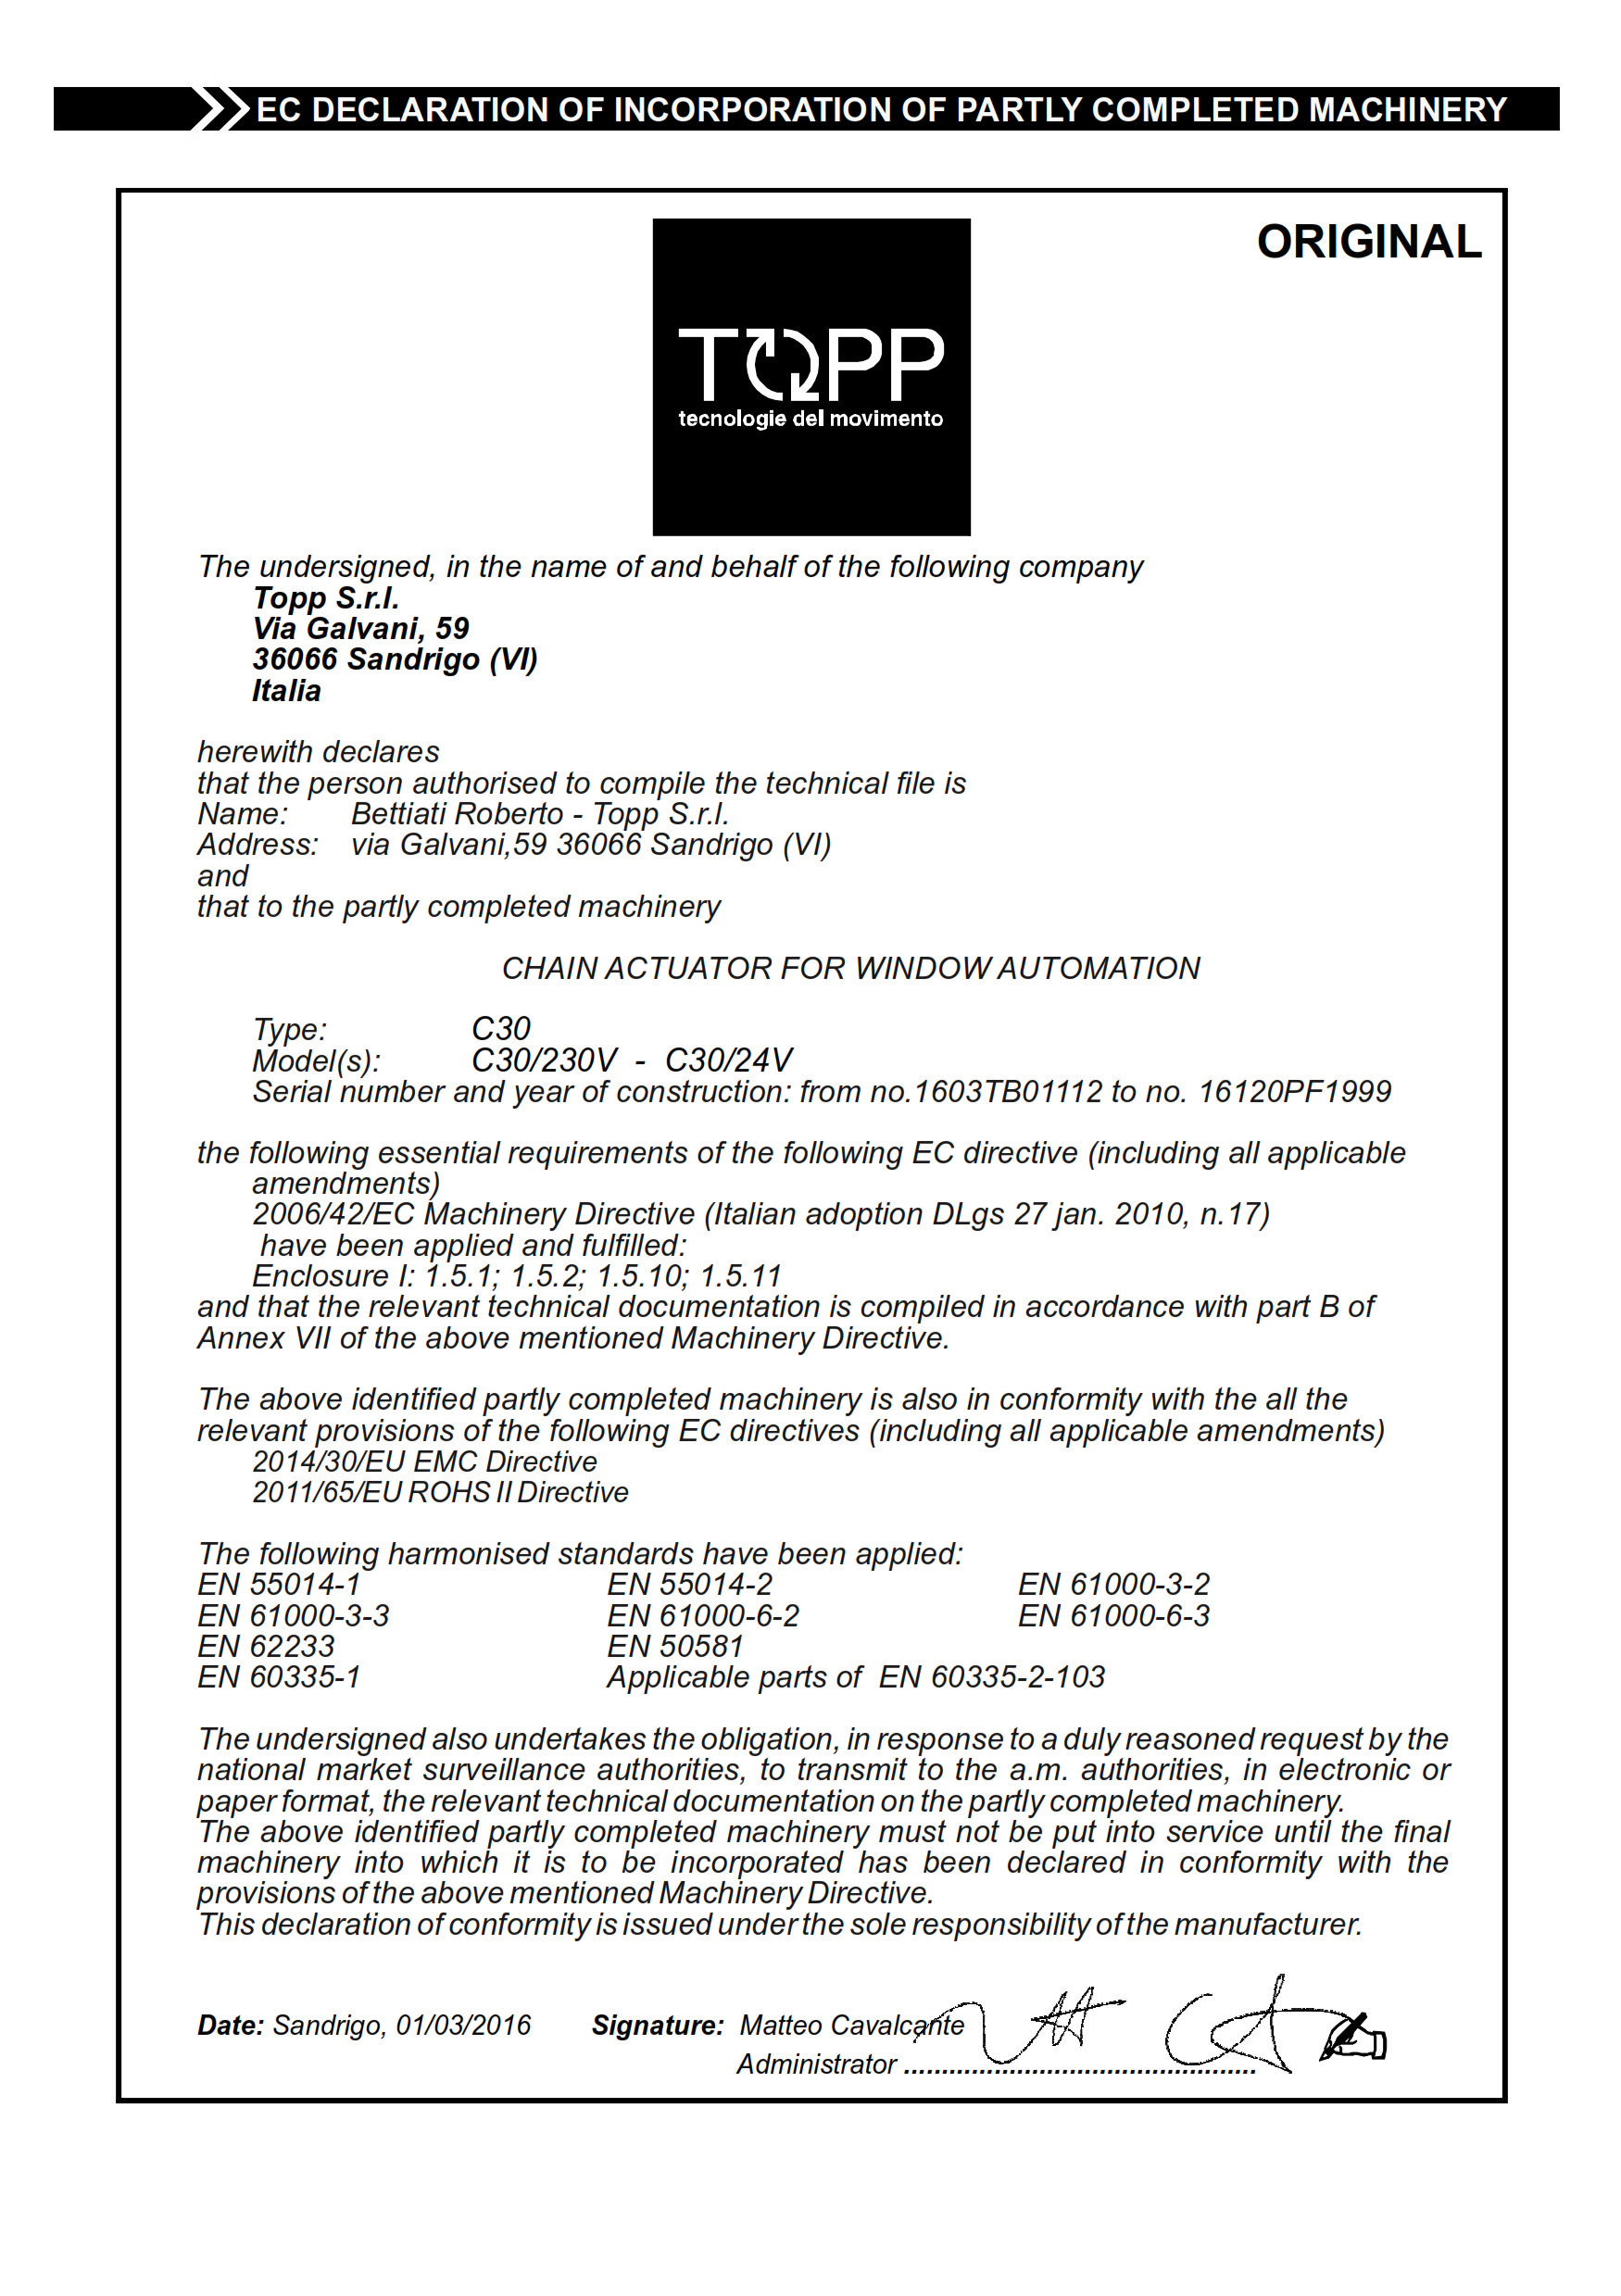 TOPP chain actuator C30 certifications 001